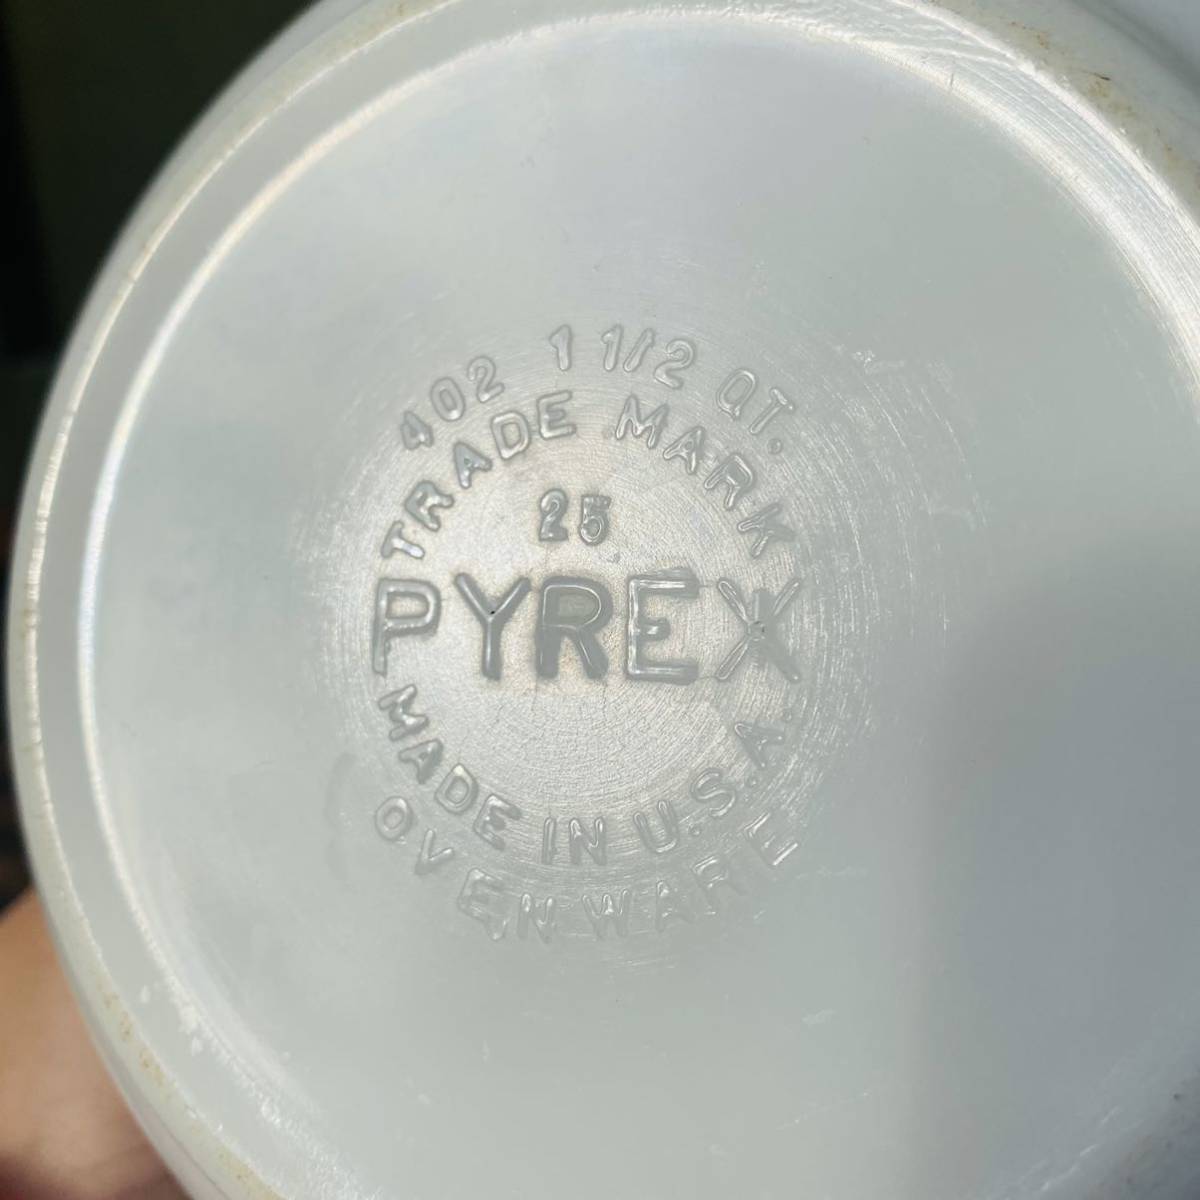 [60*s USA vintage] Old Pyrex mixing bowl 